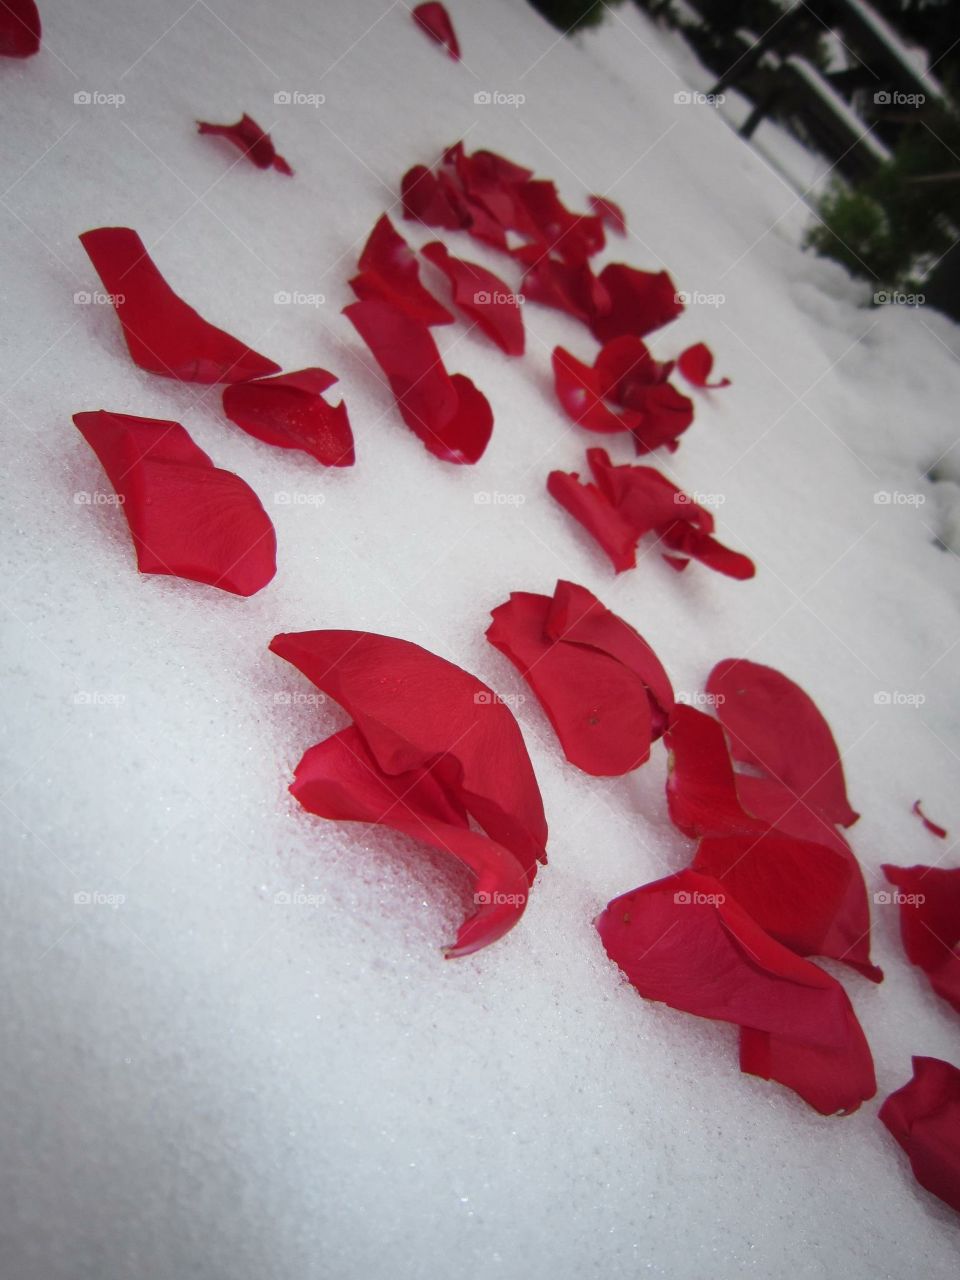 Rose petals in the snow 